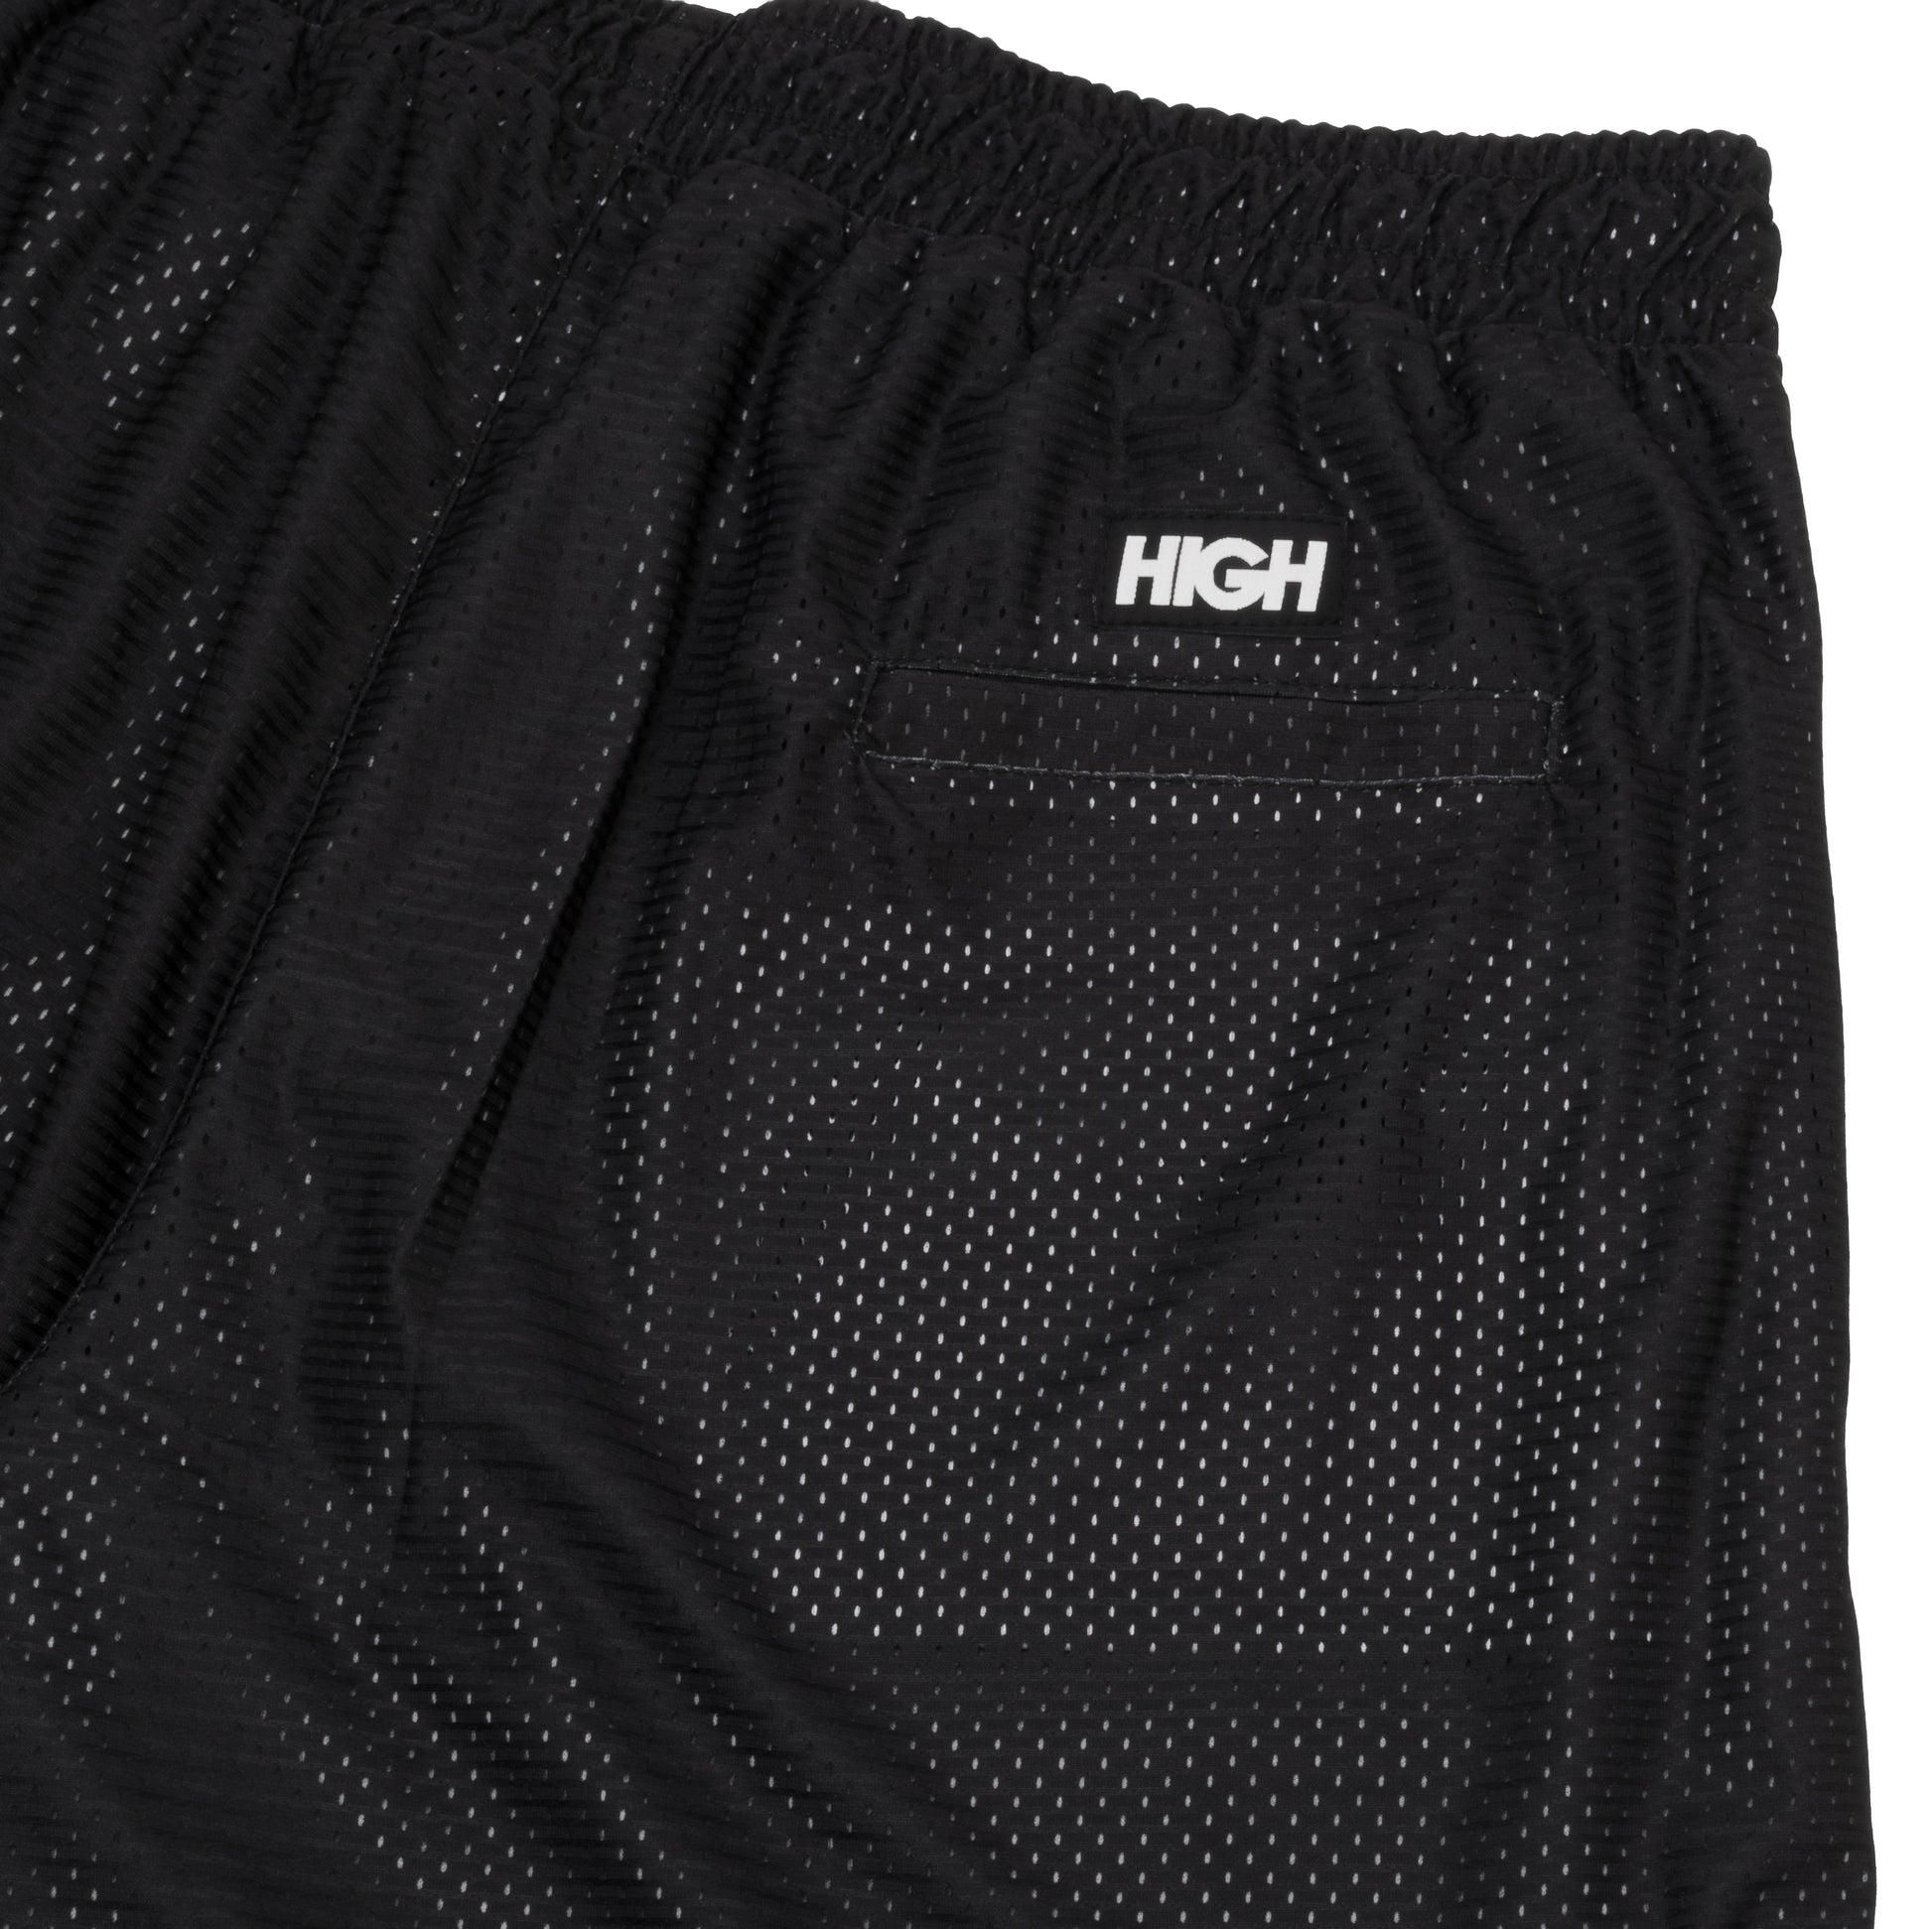 HIGH - Mesh Shorts Champion "Black" - THE GAME